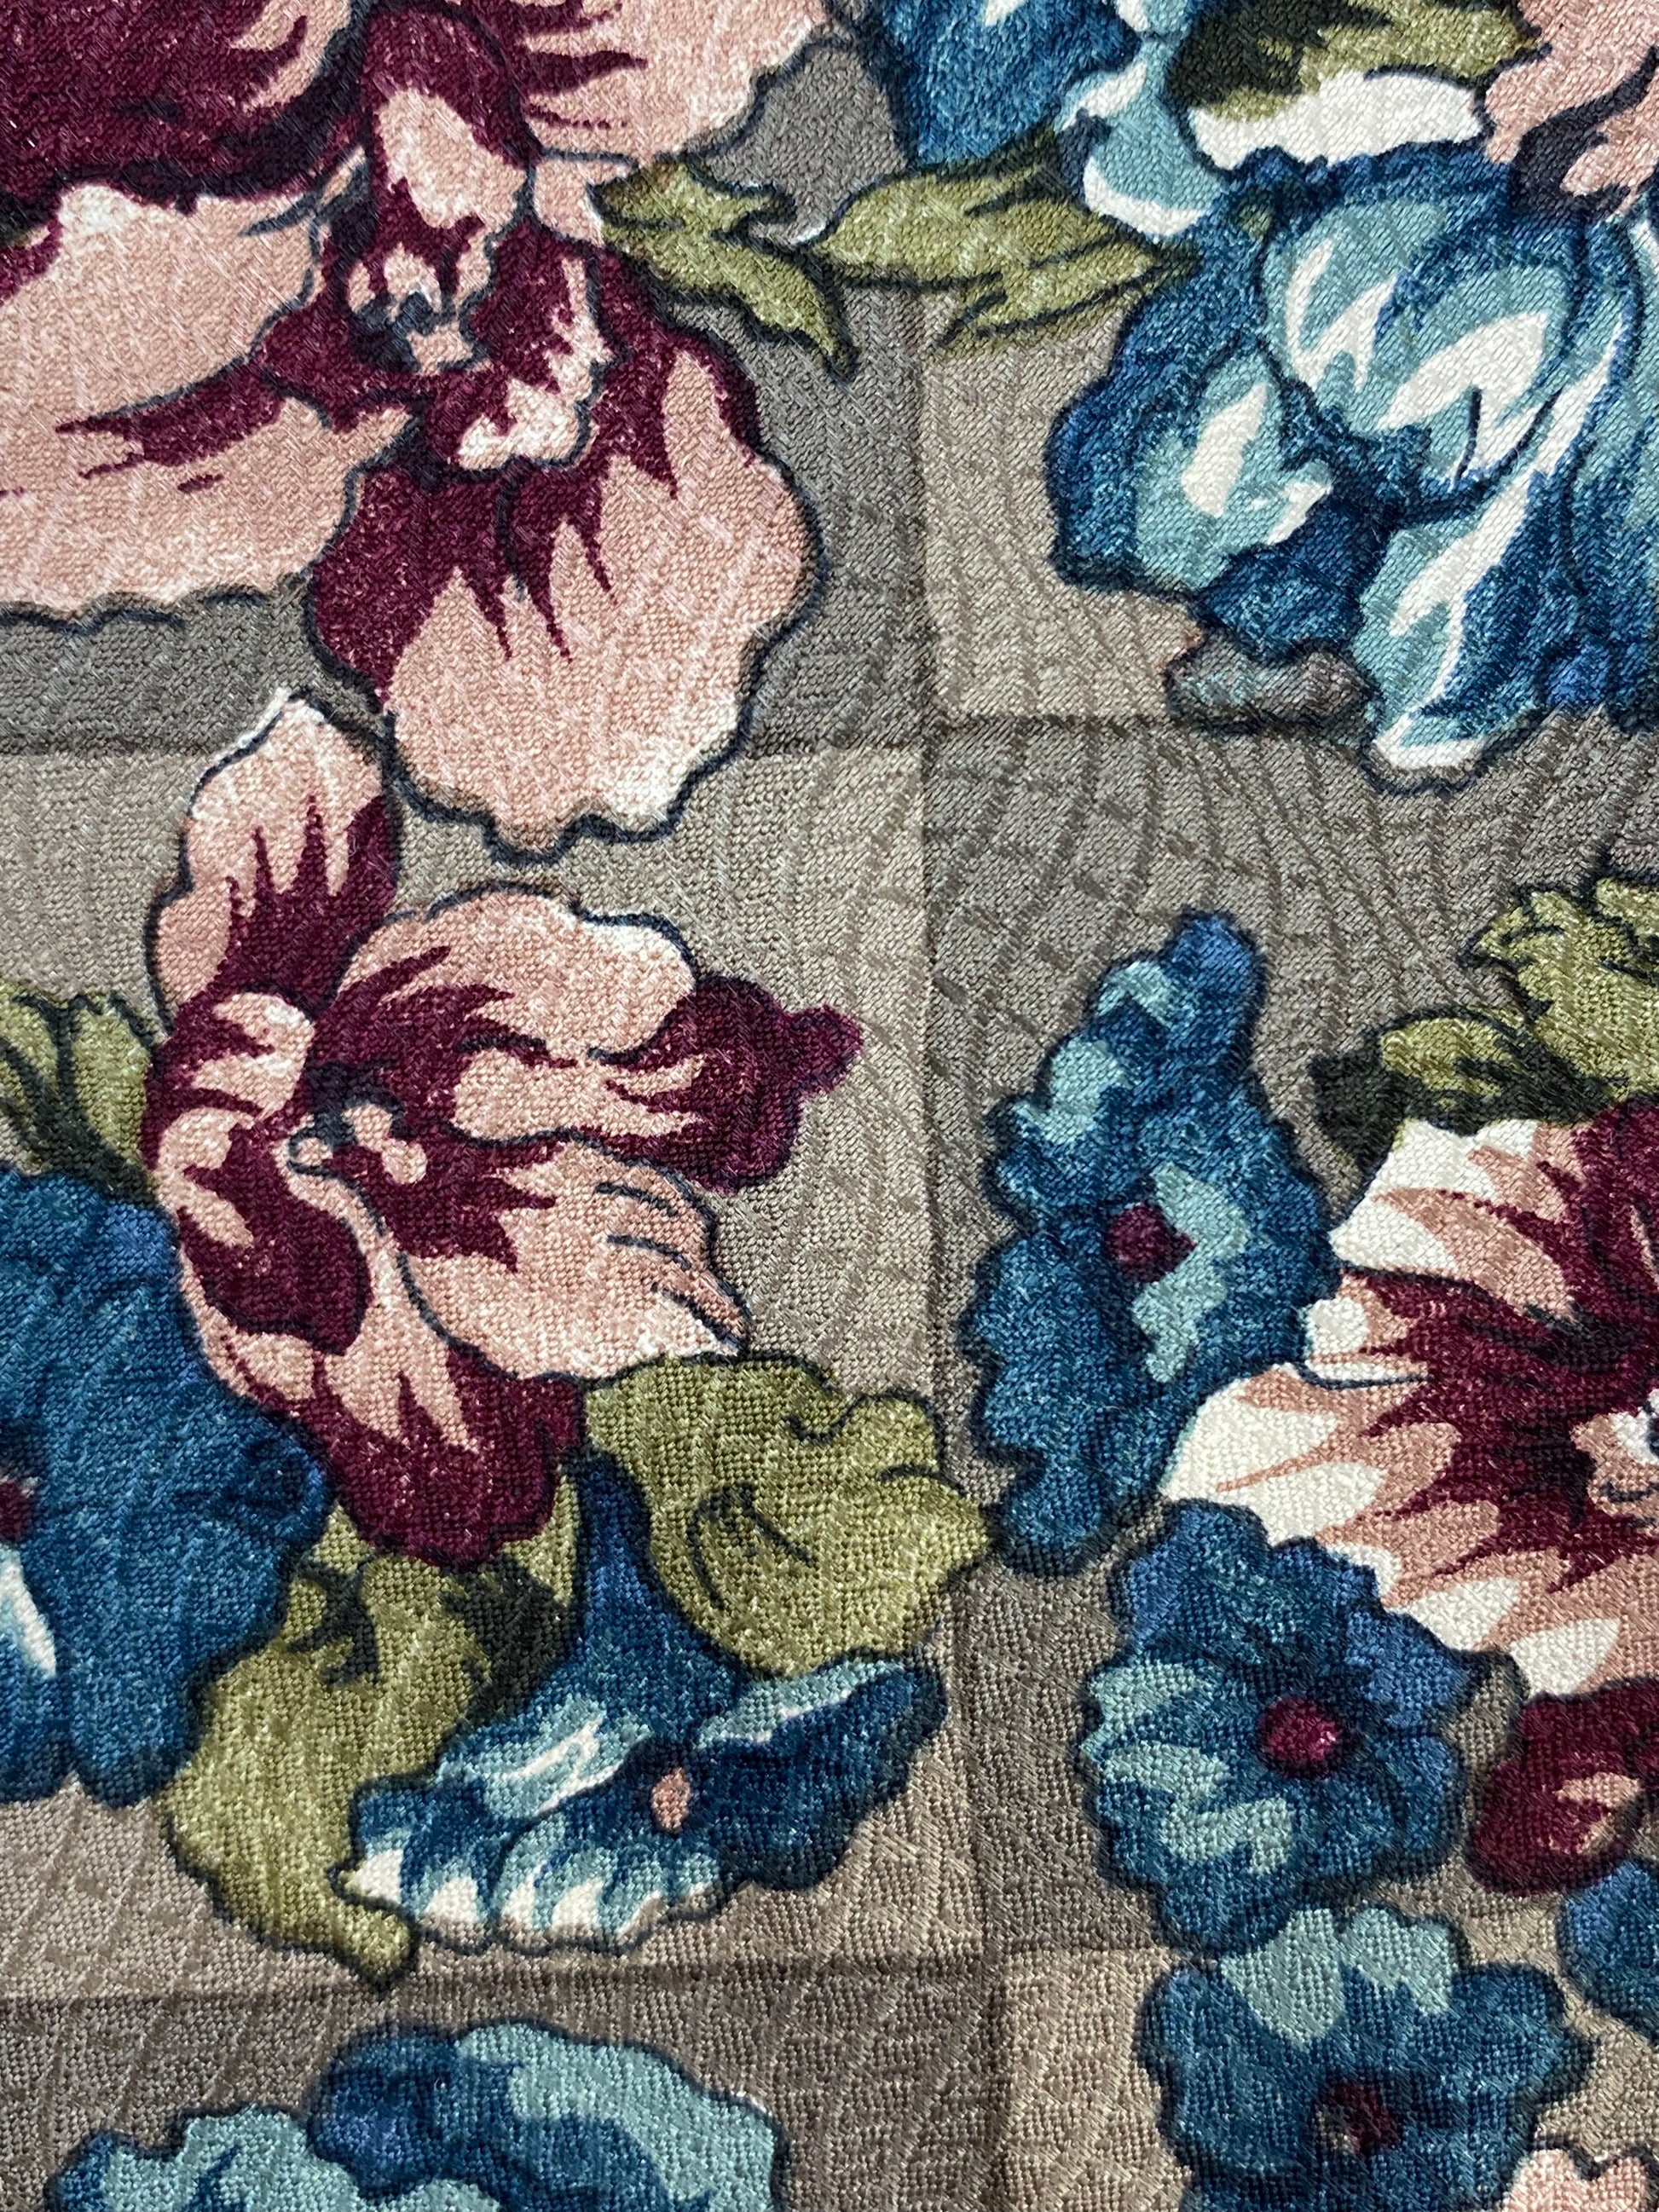 Close-up detail of: 90s Deadstock Silk Necktie, Men's Vintage Taupe/ Blue / Pink Floral Pattern Tie, NOS